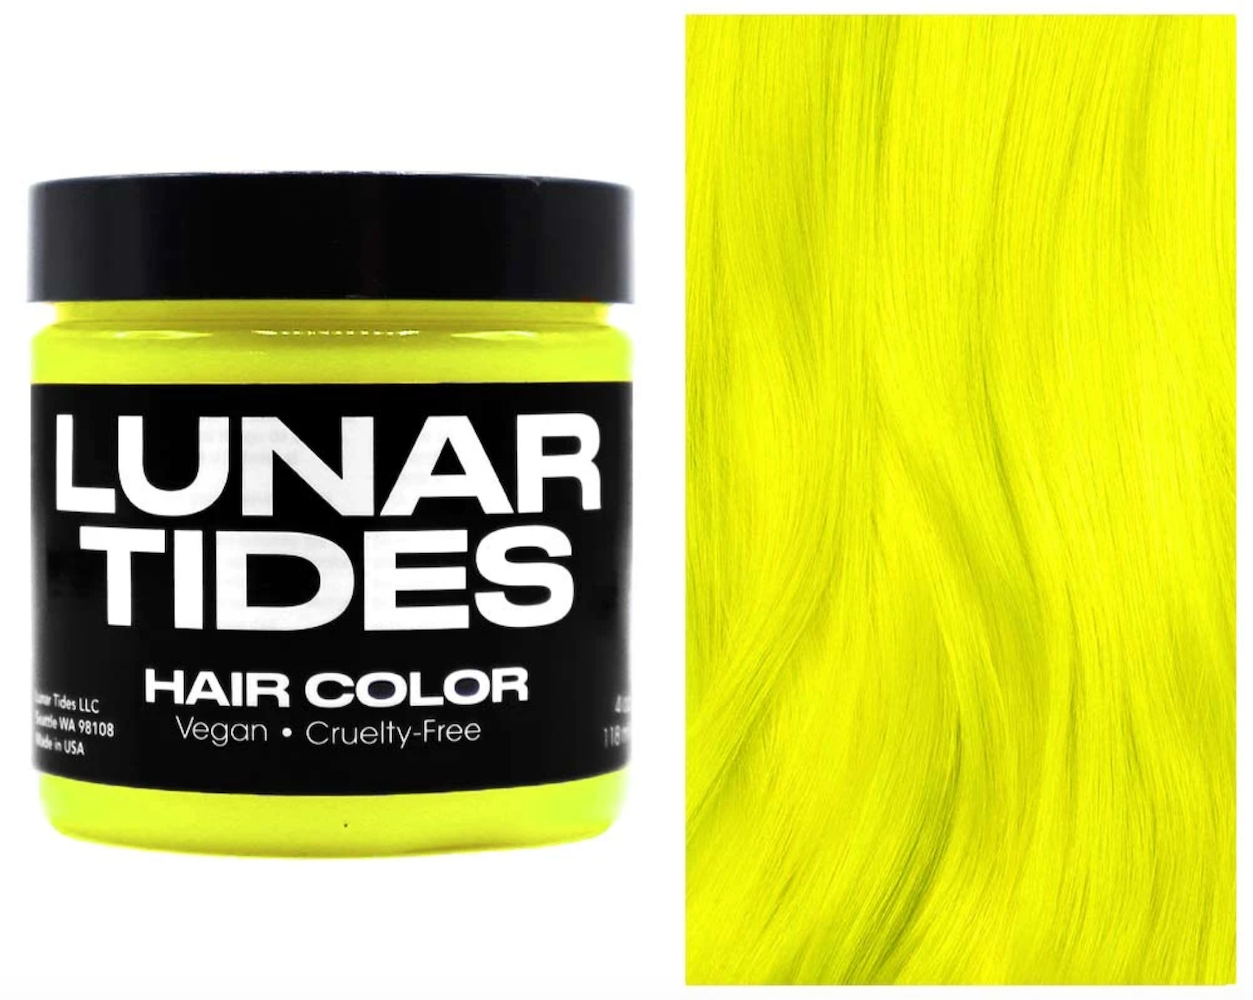 Lunar Tides Hair Dye - Neon lemon, a neon yellow jar of hair dye. Example of yellow hair.